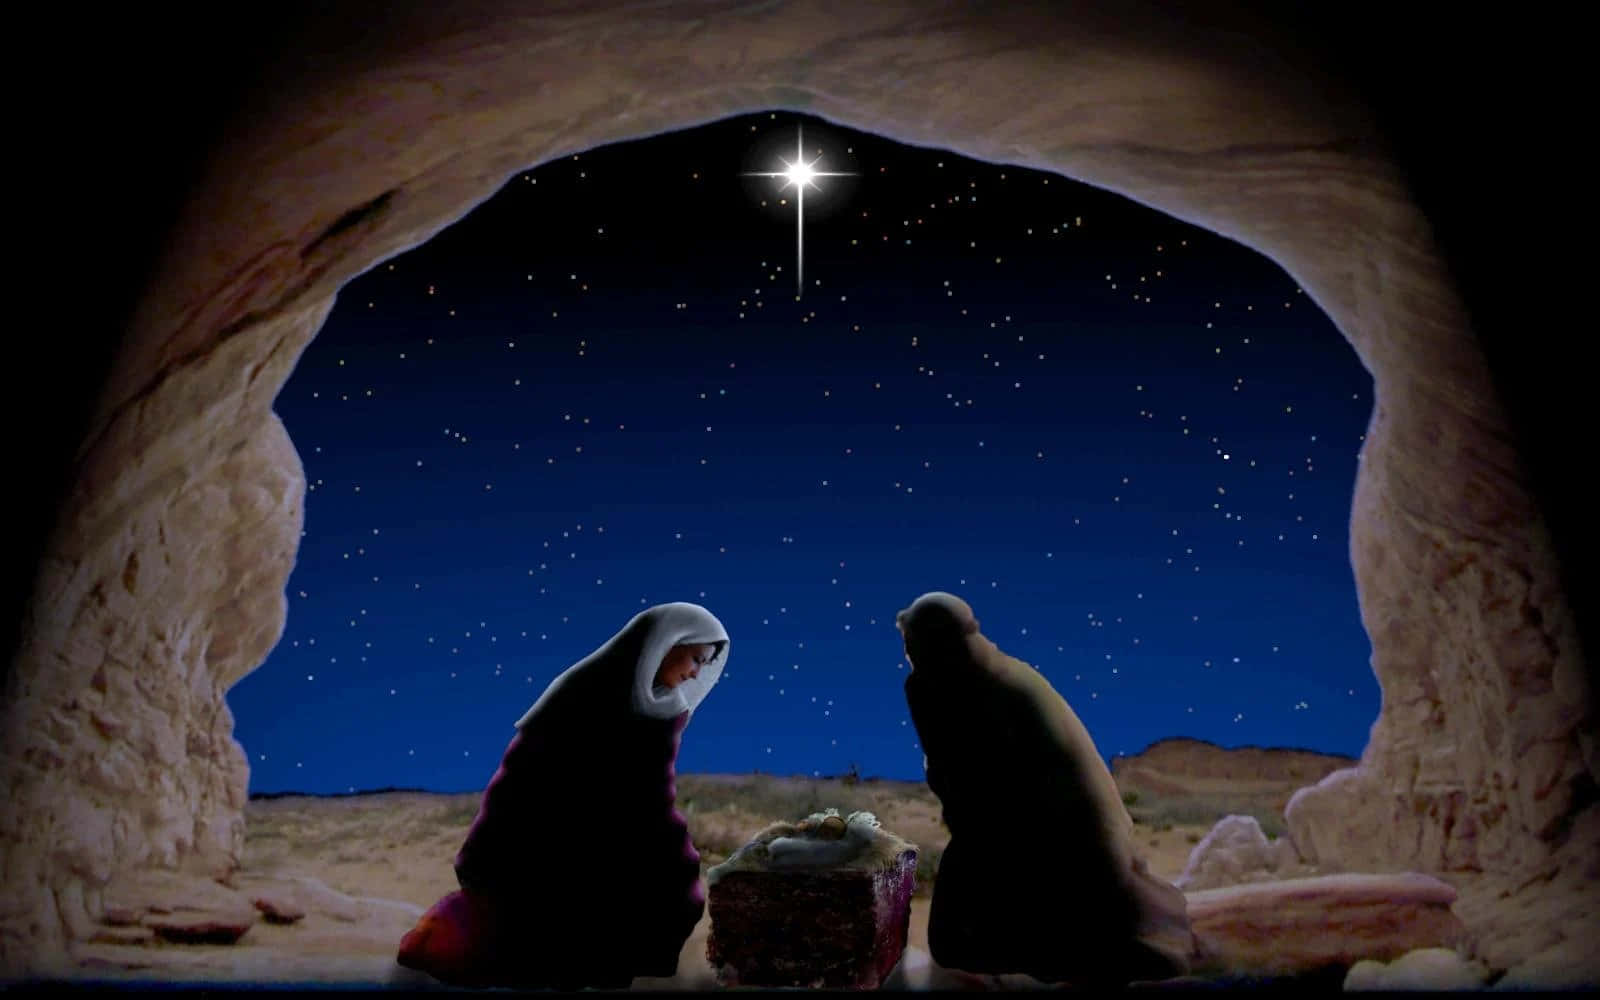 The Nativity Scene